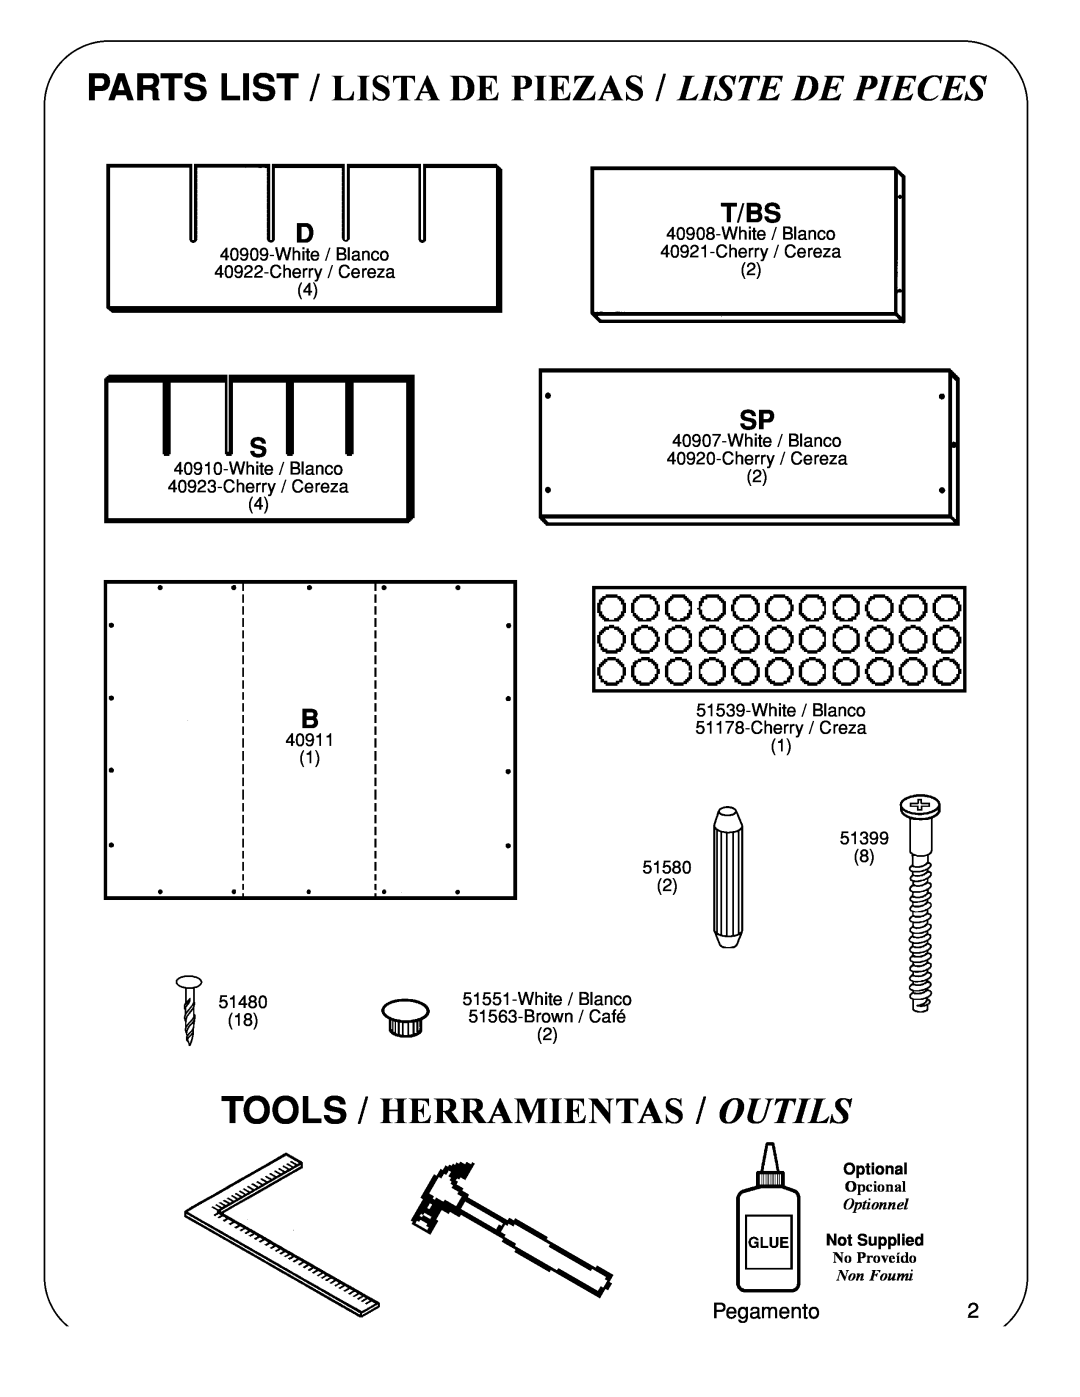 Closet Maid 12732, 12737 T/Bs, Pegamento2, Parts List / Lista De Piezas / Liste De Pieces, Tools / Herramientas / Outils 